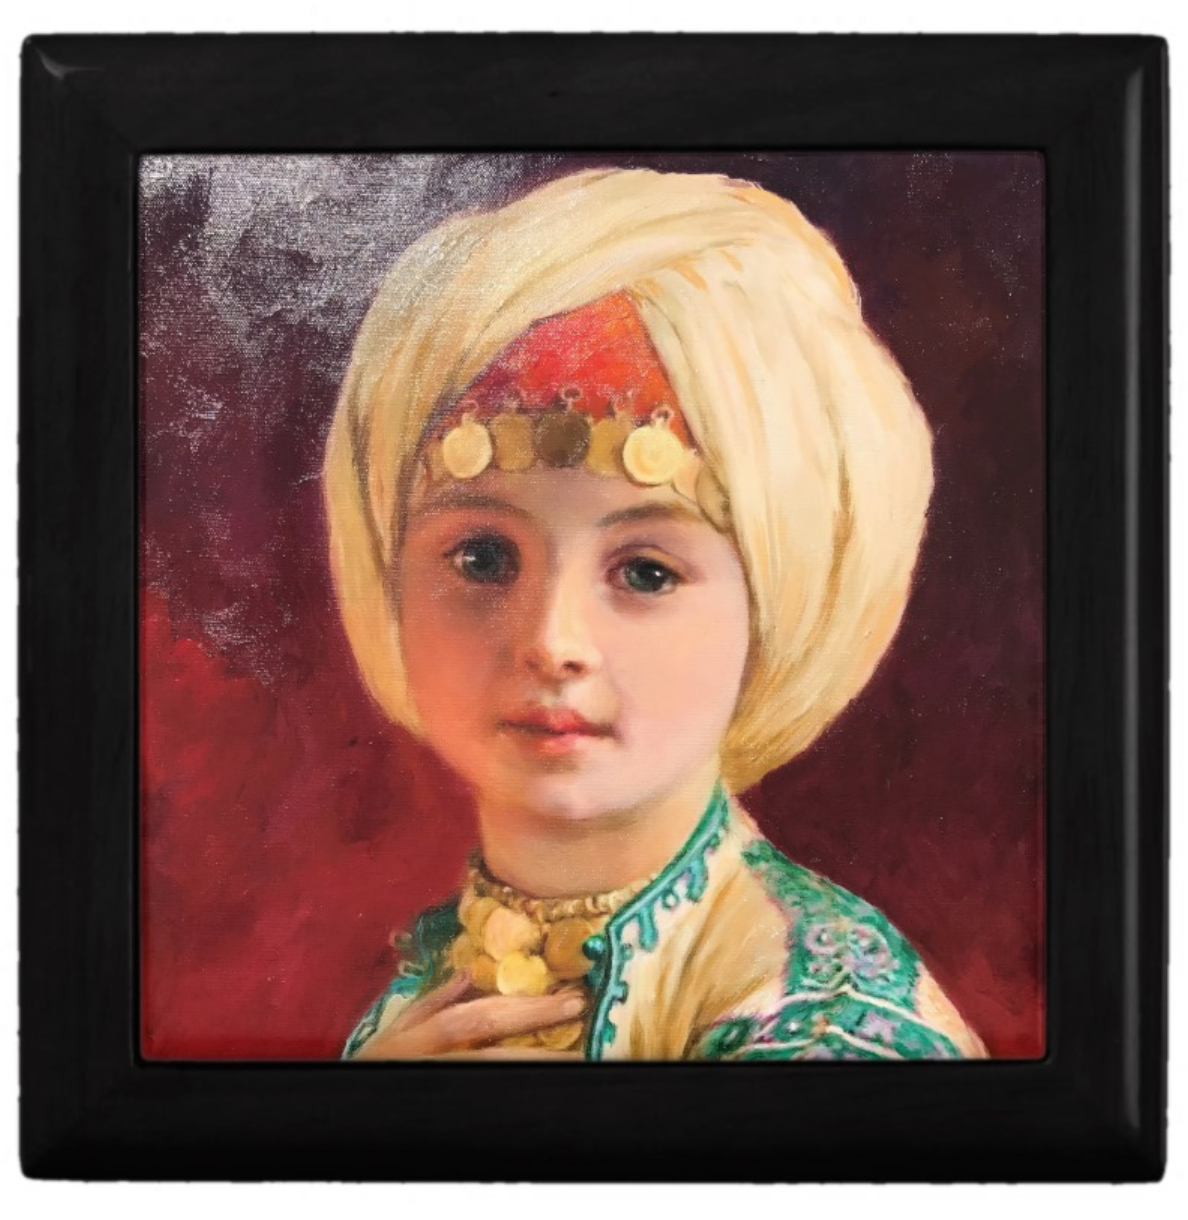 Keepsake/Jewelry Box - Carl Haag Child with Turban - Lacquer Box Black